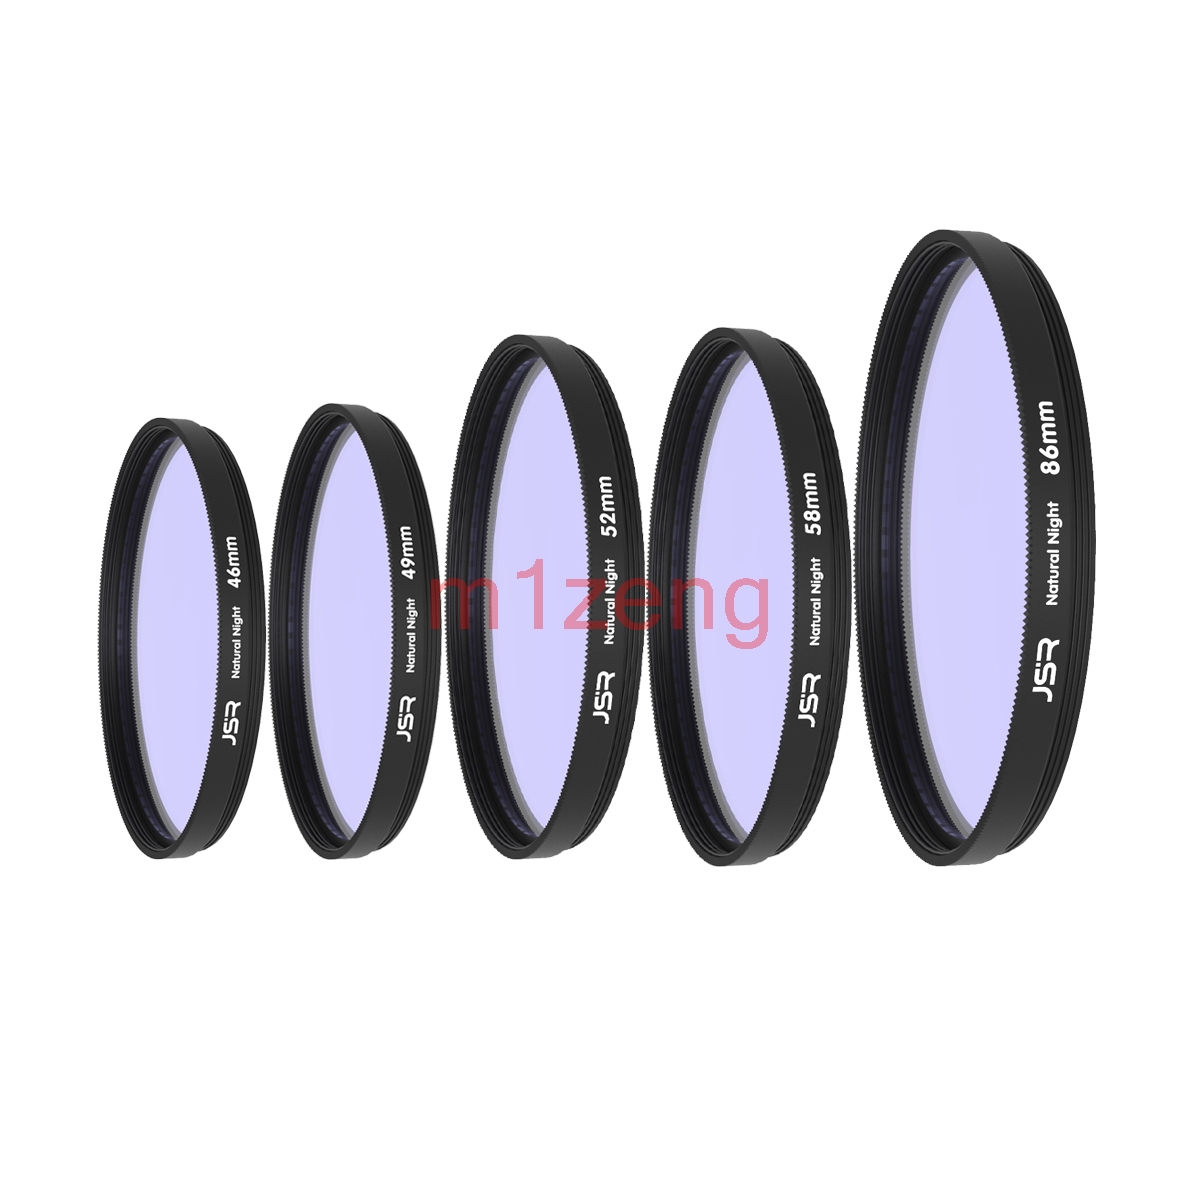 natural night 46 49 52 58 62 67 72 77 82 86 mc waterproof Optical Glass Lens filter Light Pollution for dslr mirrorless camera